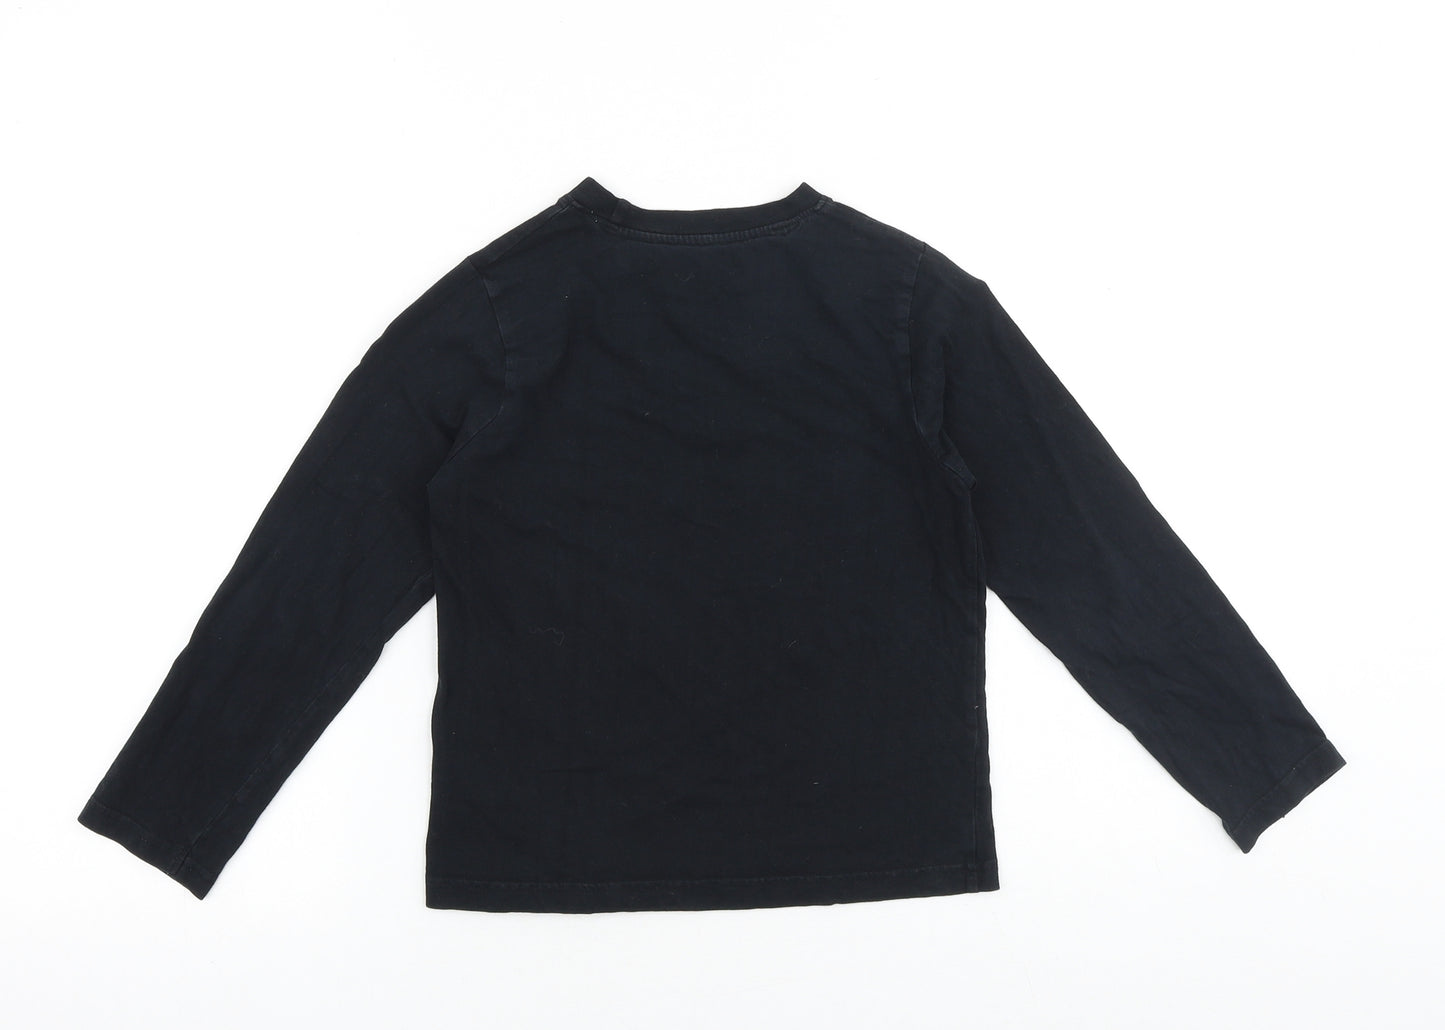 Primark Boys Black Cotton Basic T-Shirt Size 8-9 Years Round Neck Pullover